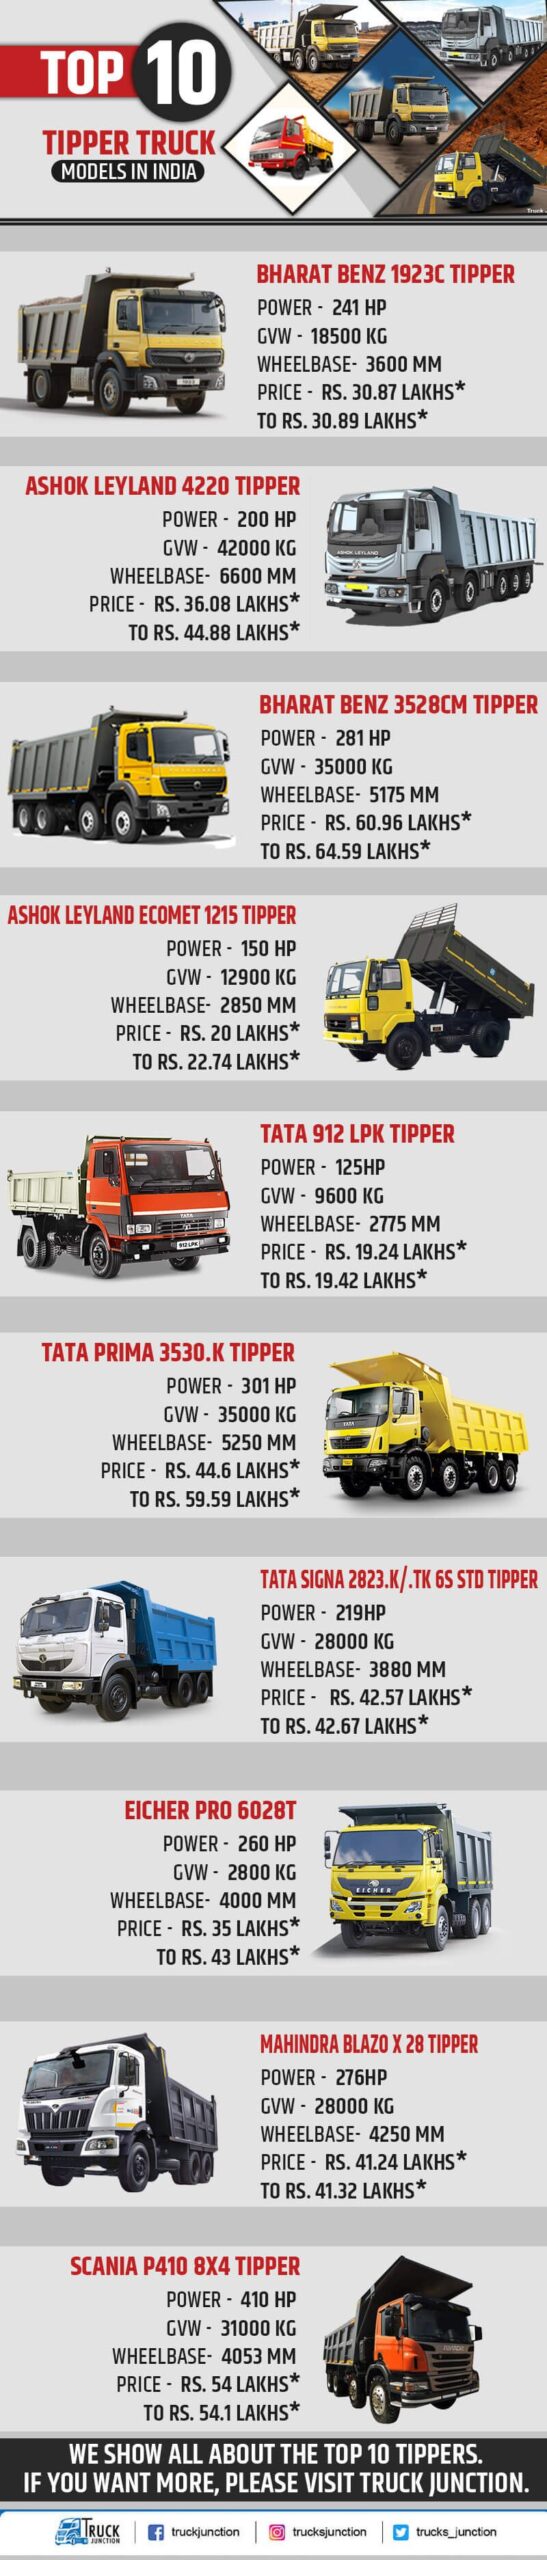 Top 10 Tipper Truck infogiraphic